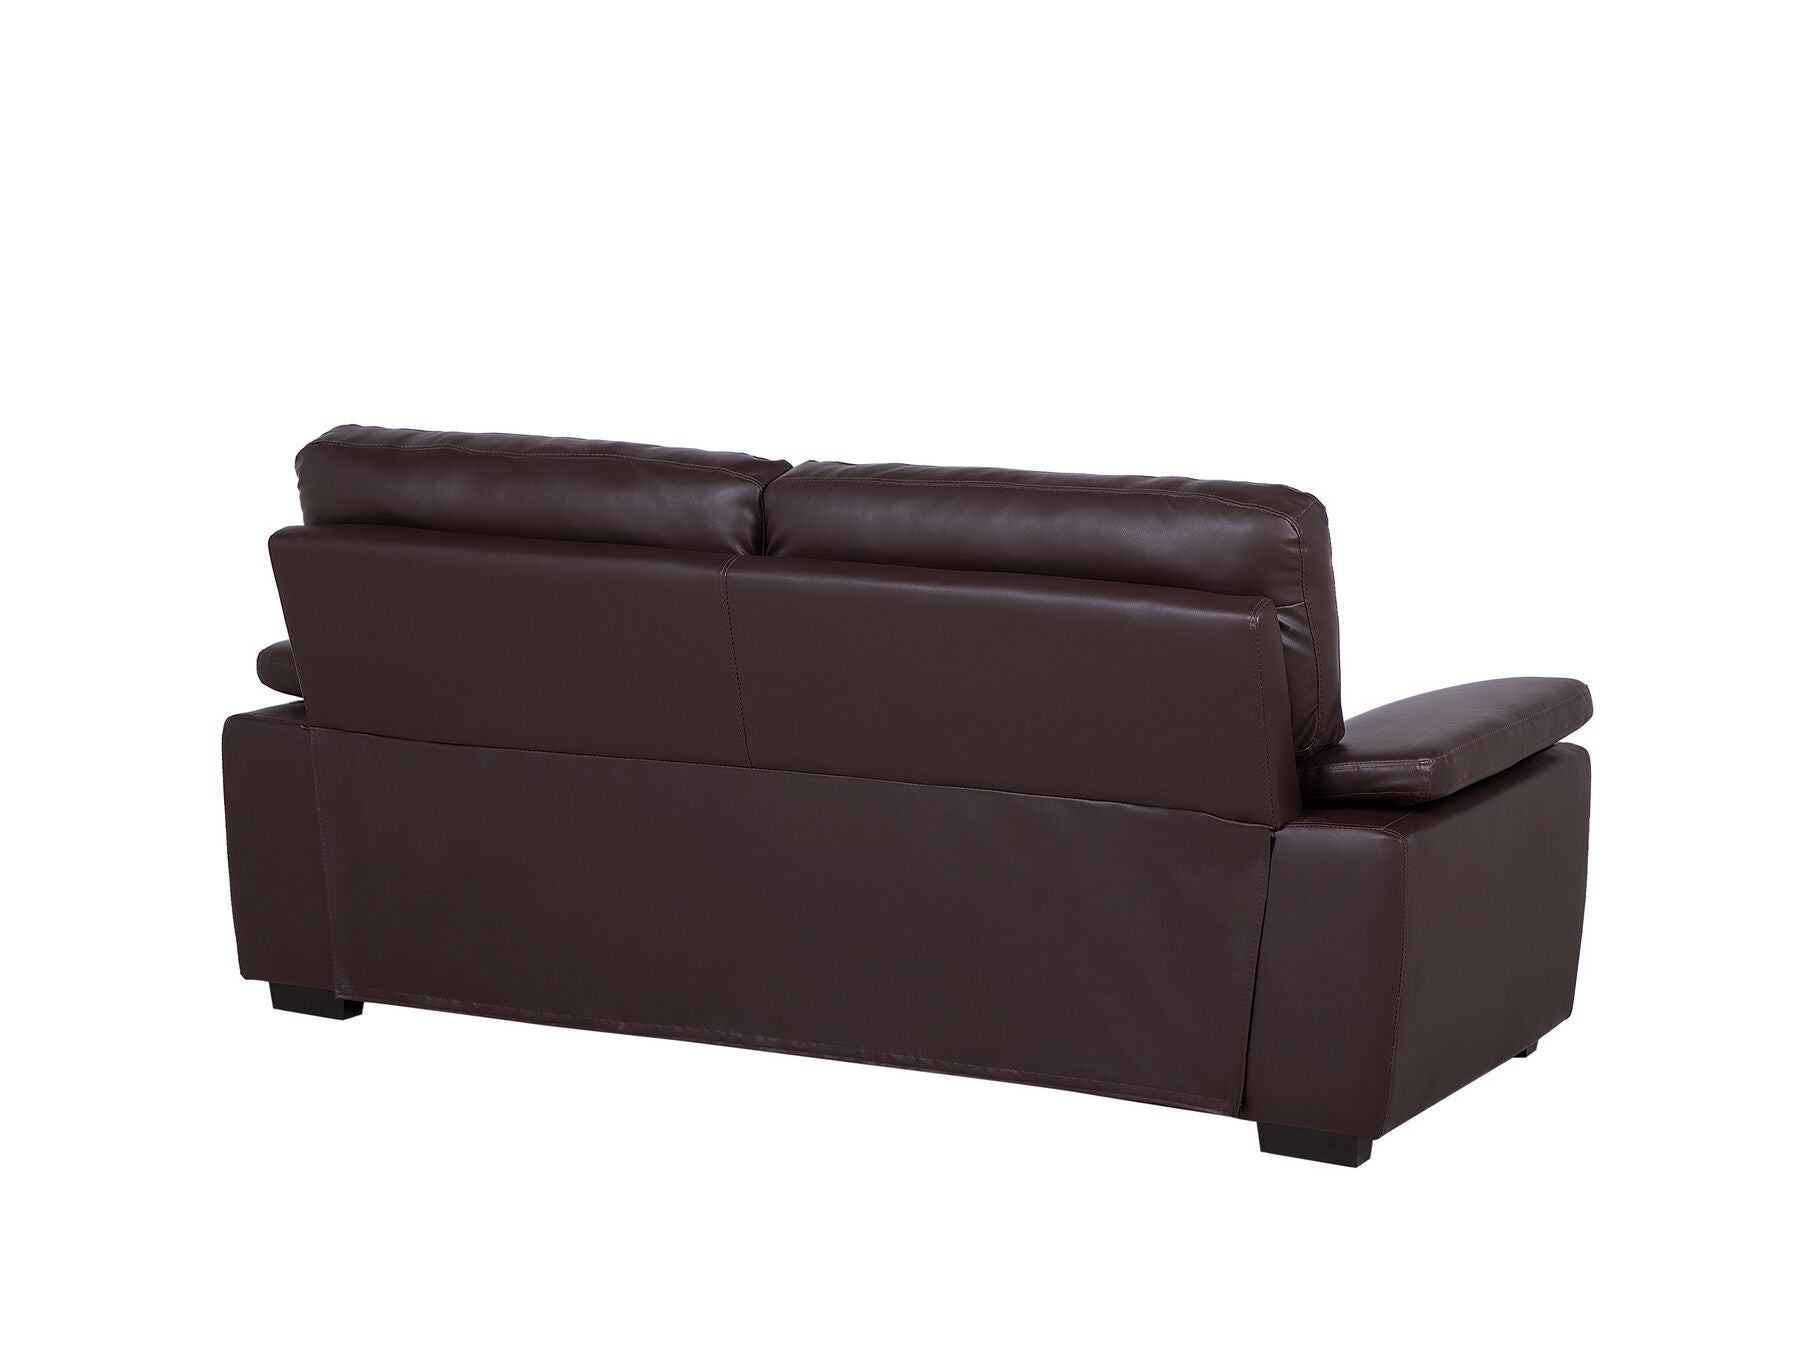 Vogar Leatherette Sofa (Brown)